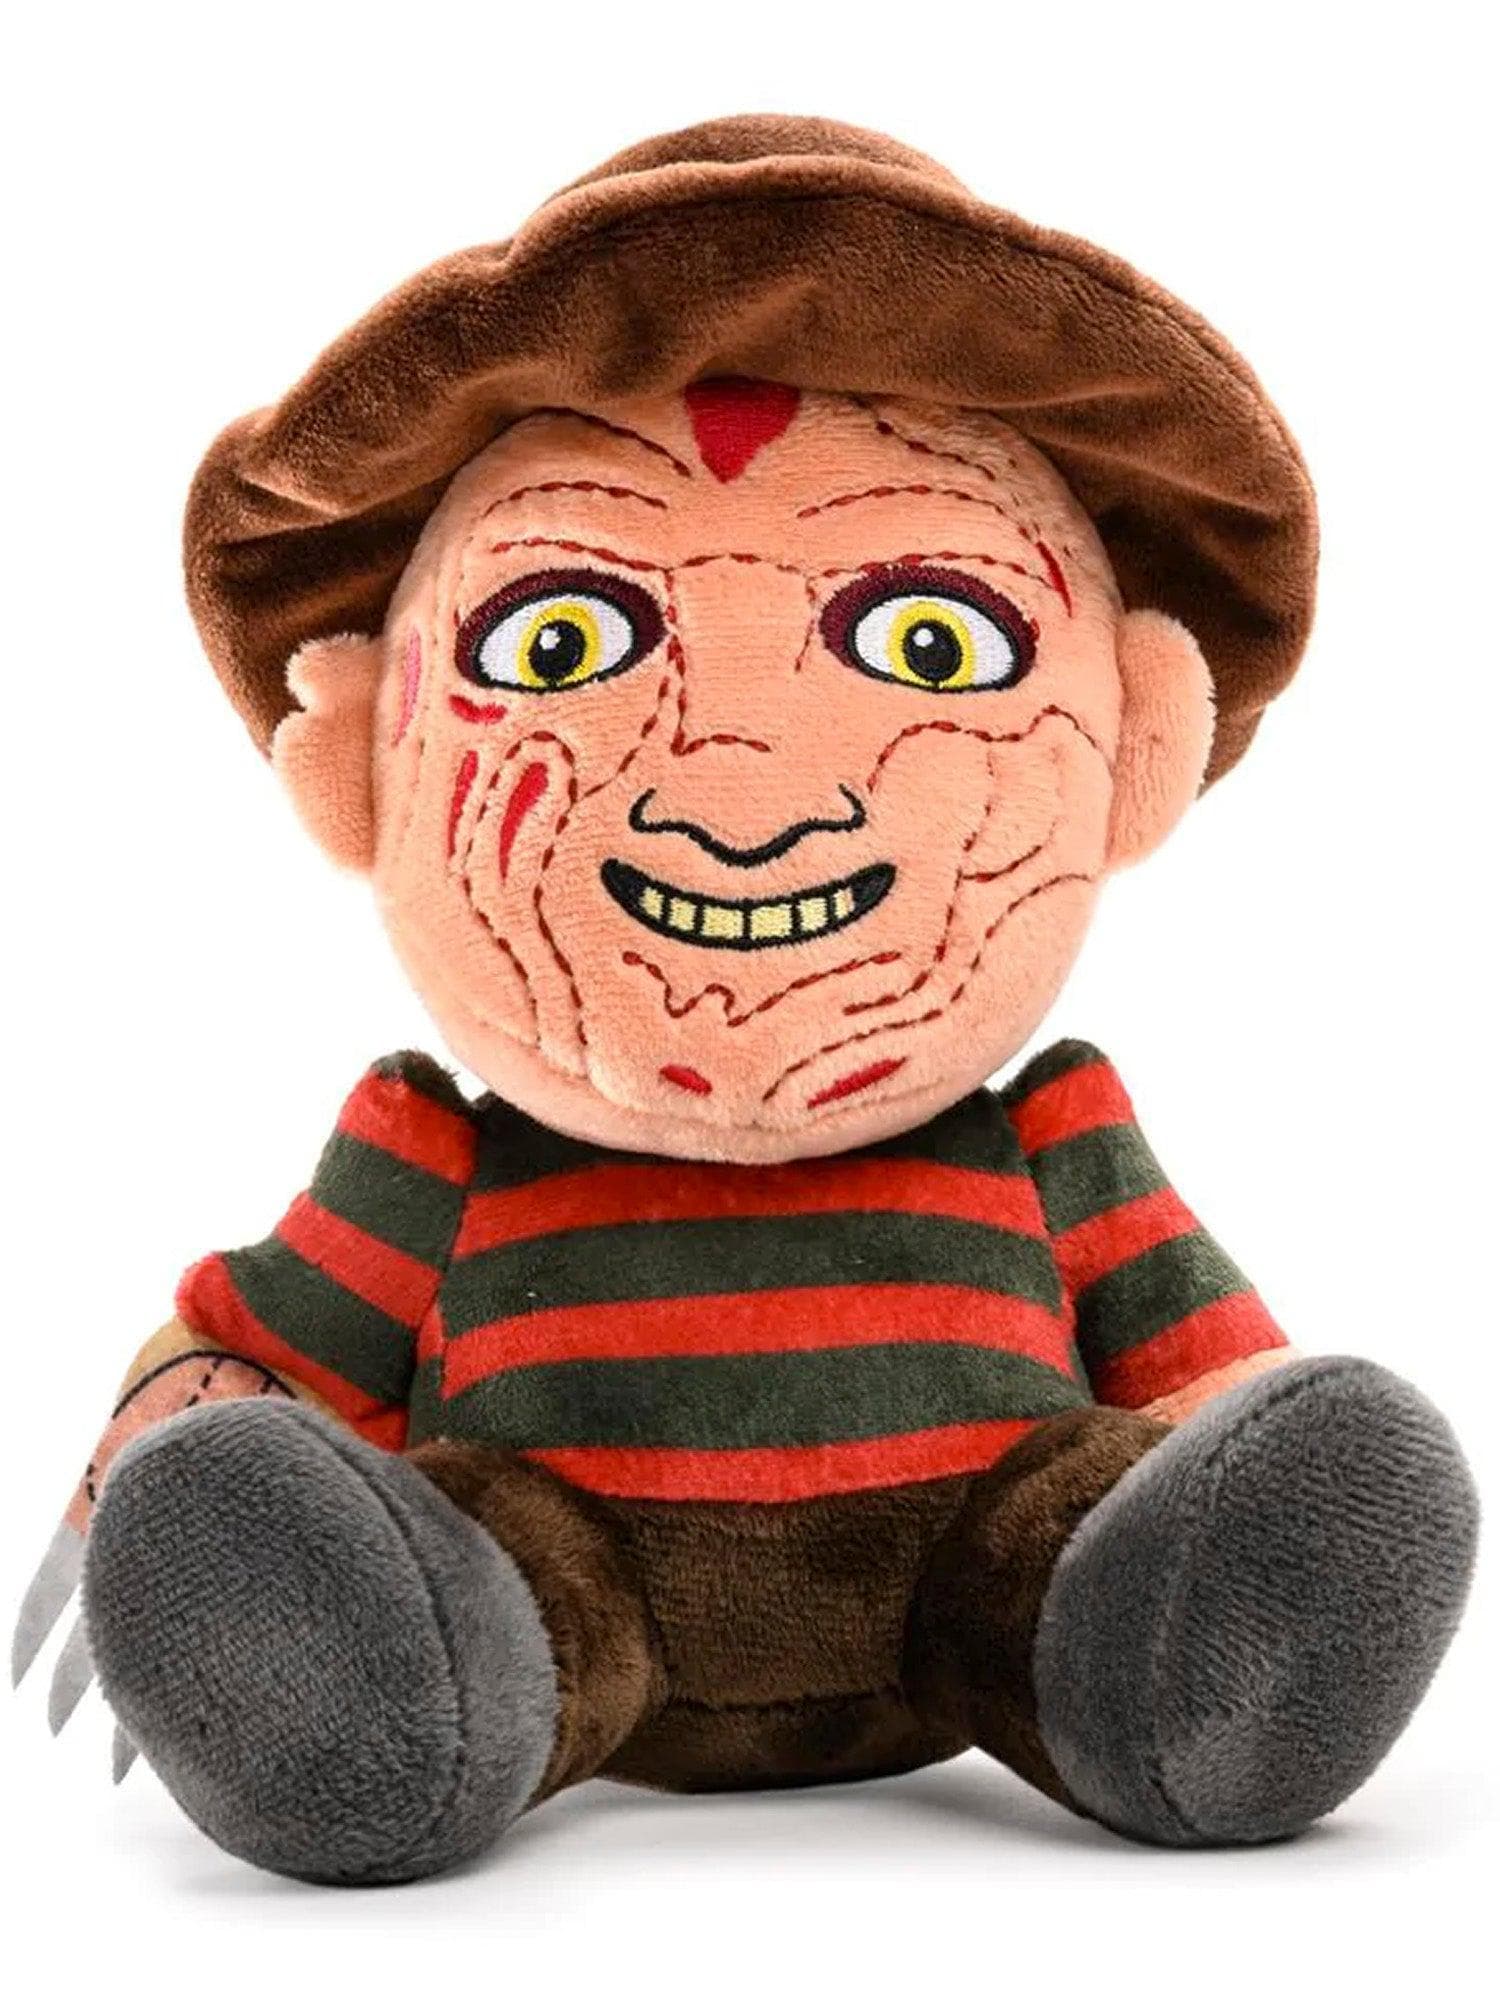 Freddy Krueger Nightmare on Elm Street Phunny Horror Plush - costumes.com